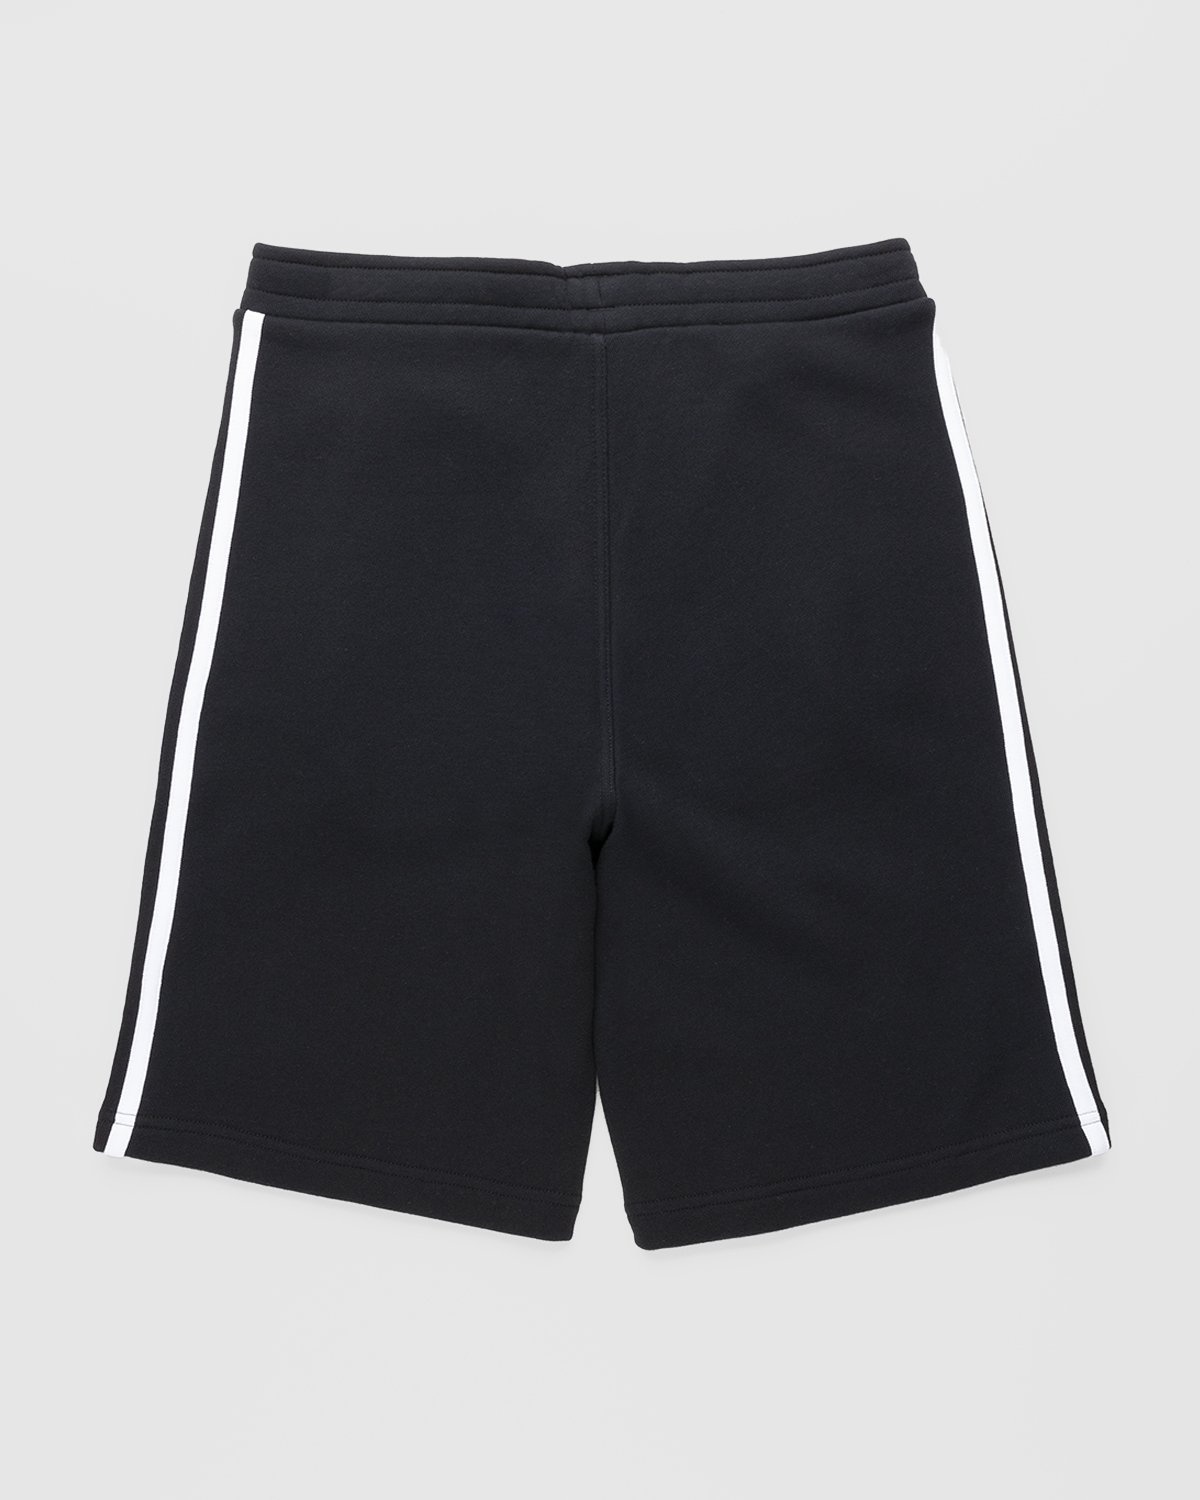 Adidas – 3 Stripe Short Black - Sweatshorts - Black - Image 2